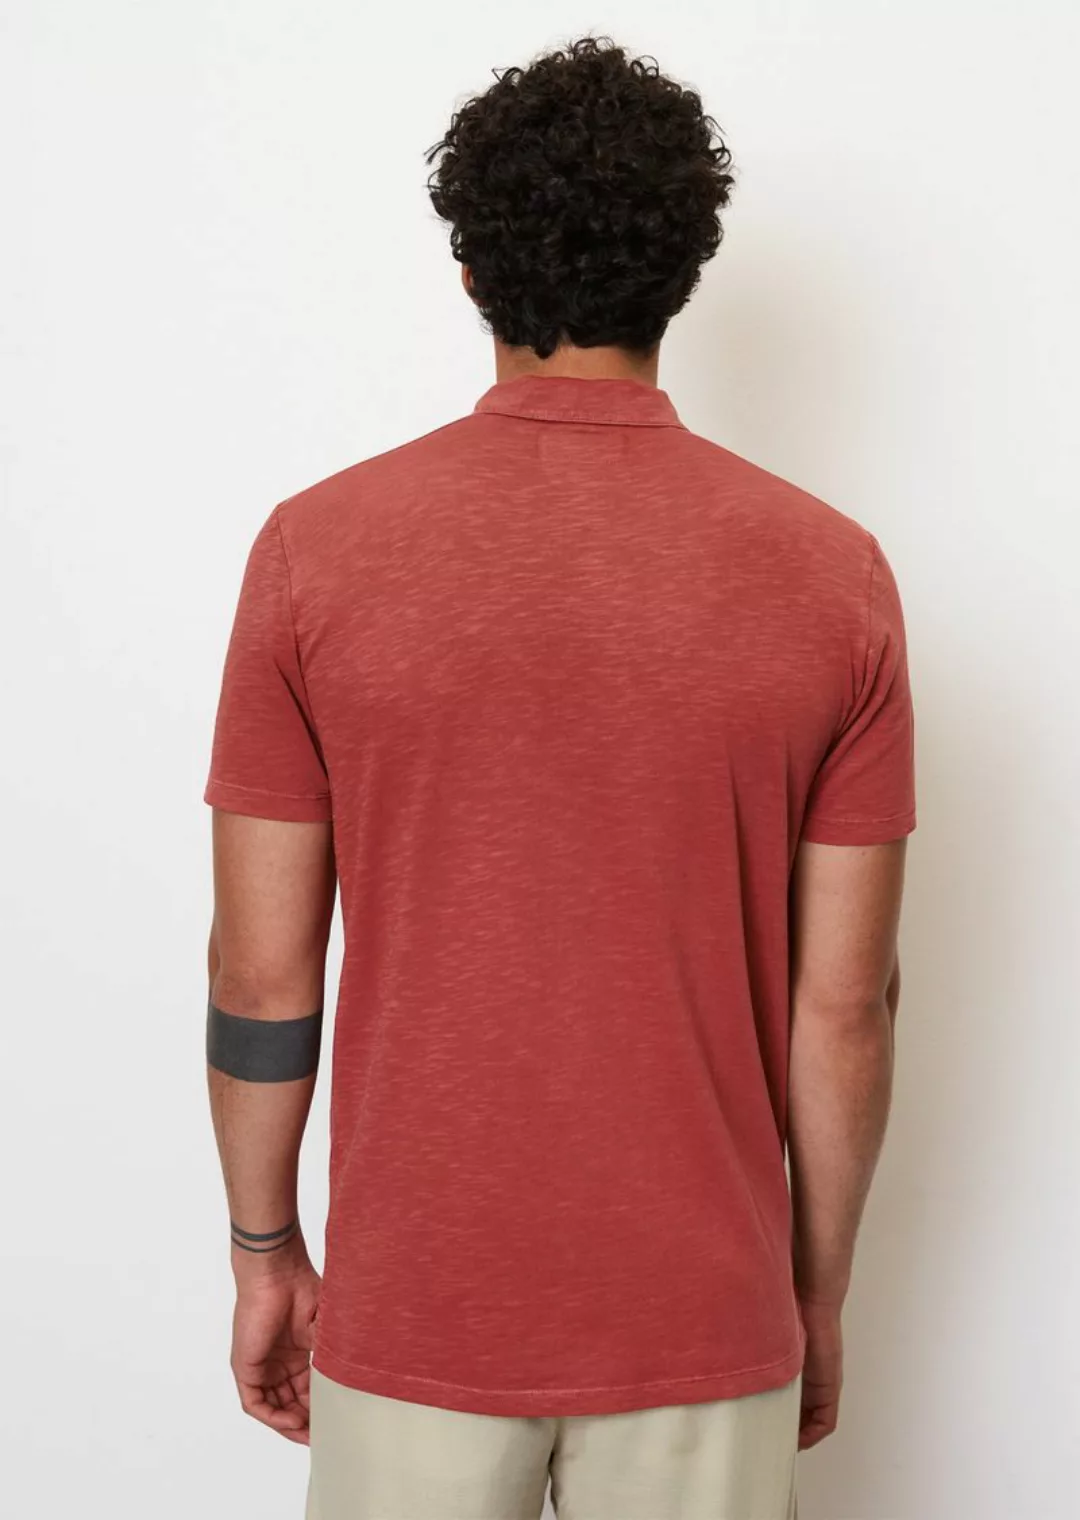 Marc O'Polo Polohemd Melange Rot - Größe M günstig online kaufen